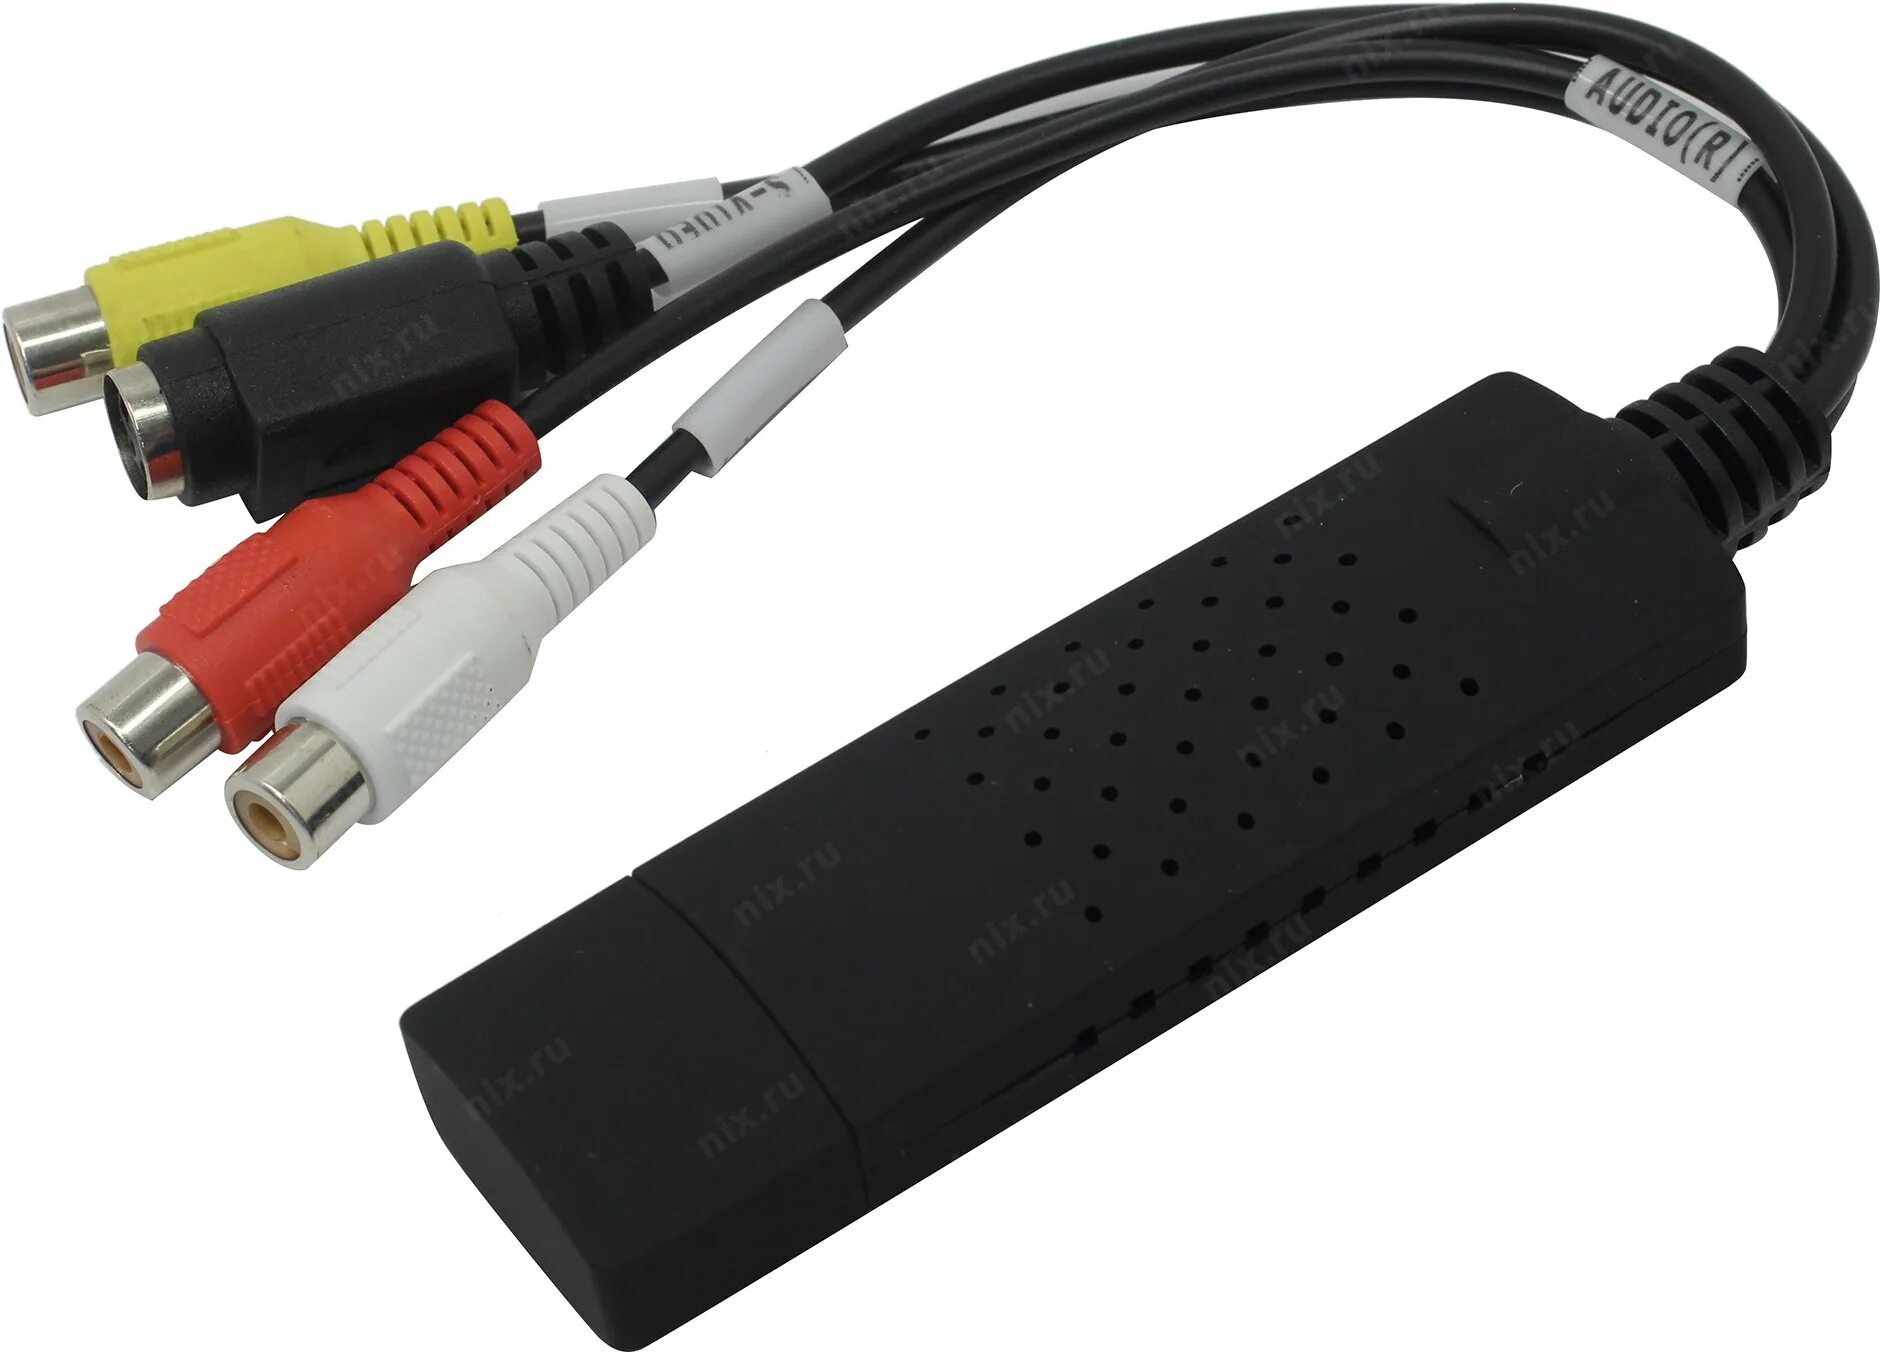 Easier cap usb. EASYCAP USB 2.0. Triton Video Adapter USB 2.0. Декодер EASYCAP I USB 2.0 купить. USB S-Video.